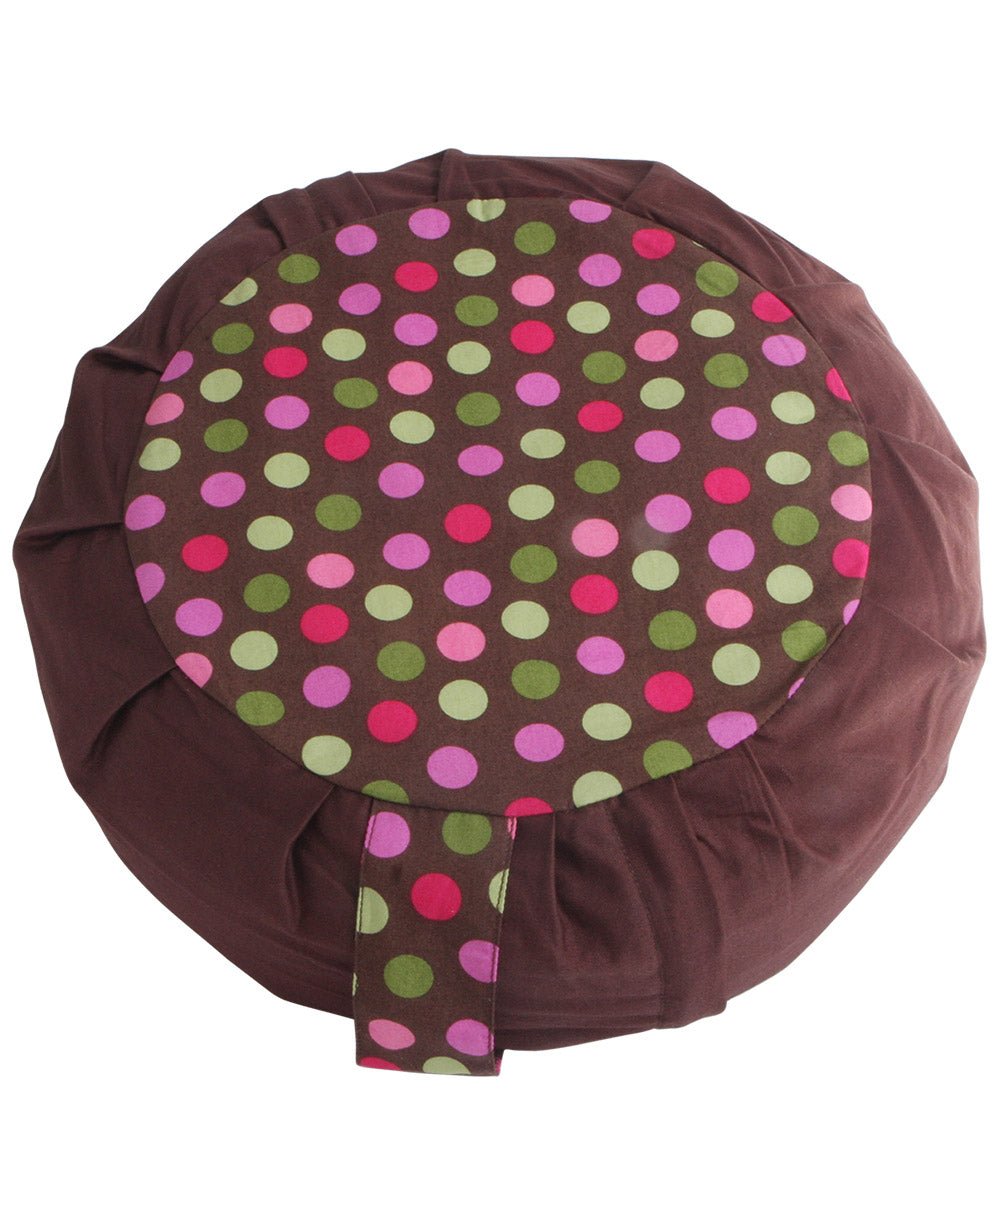 Brown and Multicolor Polka Dot Zafu Cushion - Massage Cushions